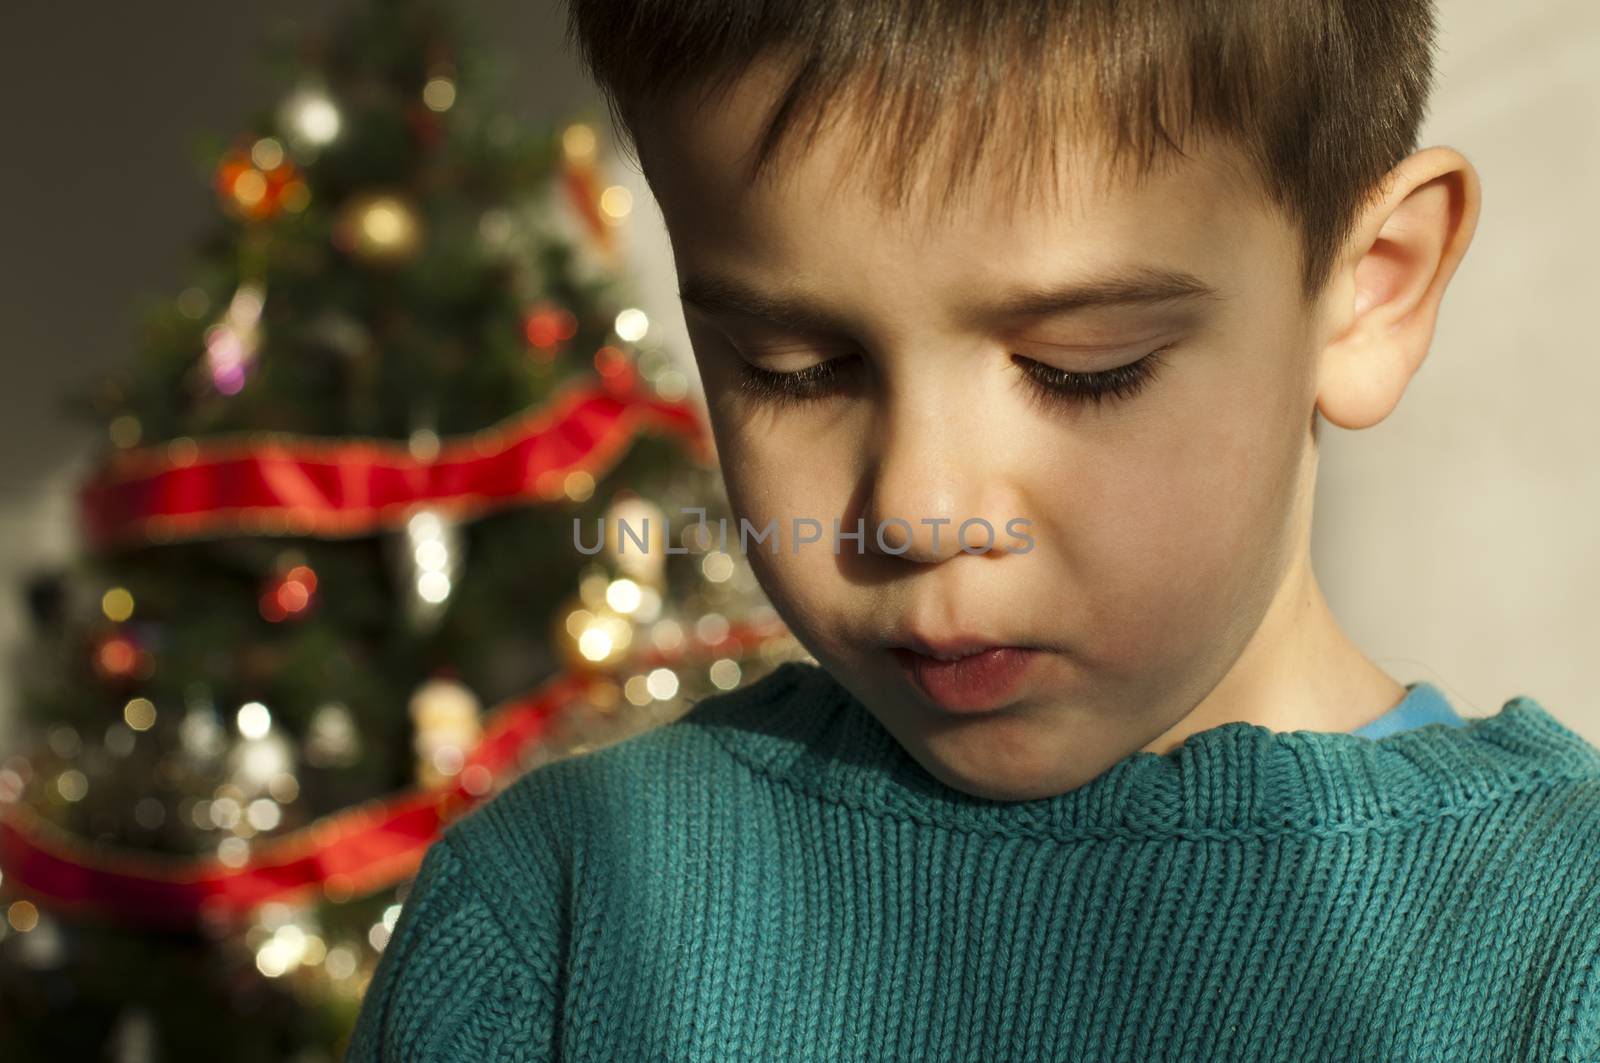 Unhappy child on Christmas by deyan_georgiev